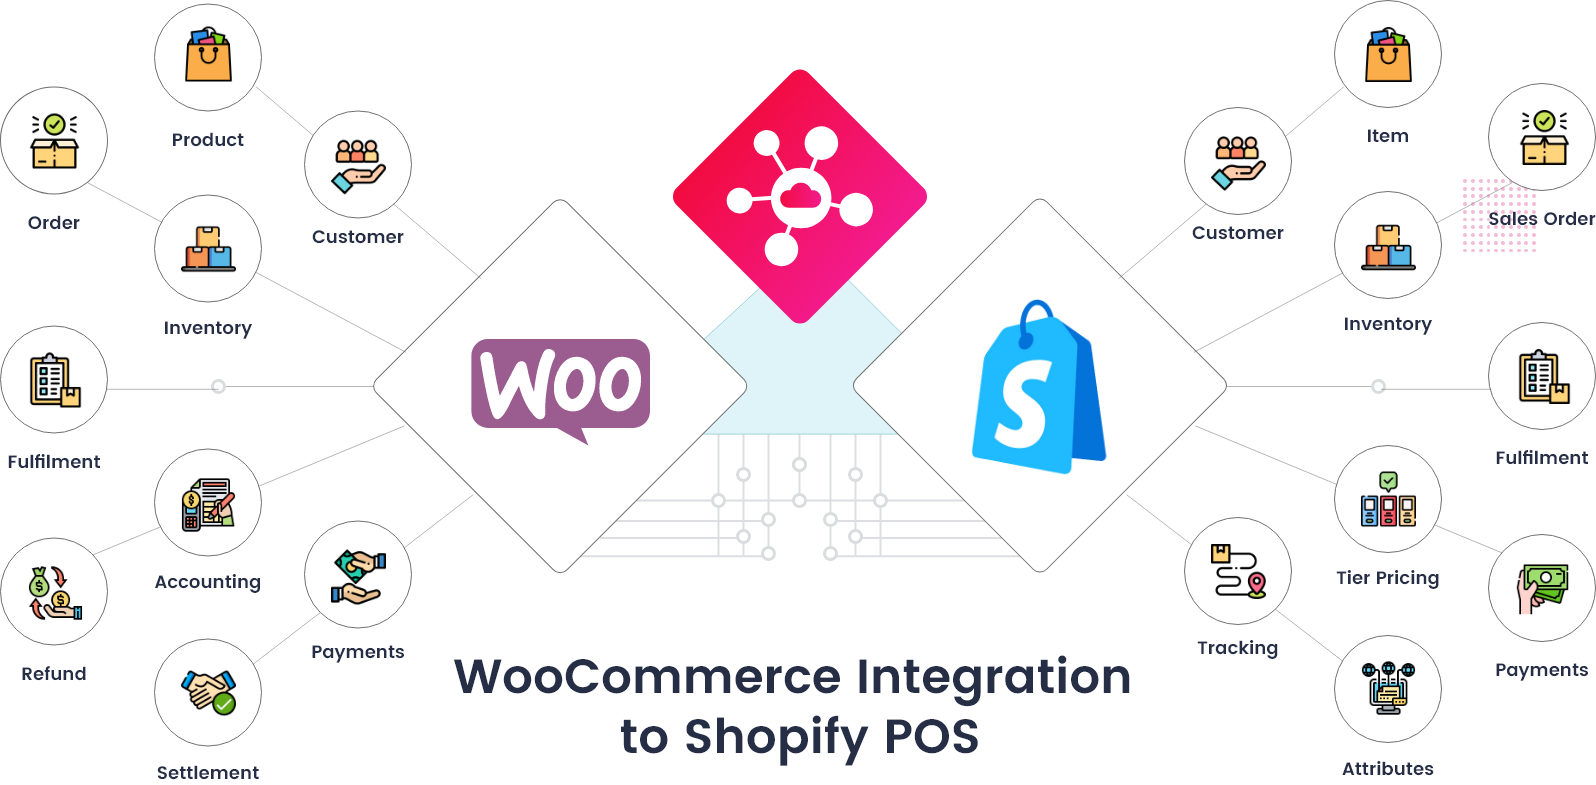 WooCommerce Shopify POS Integration